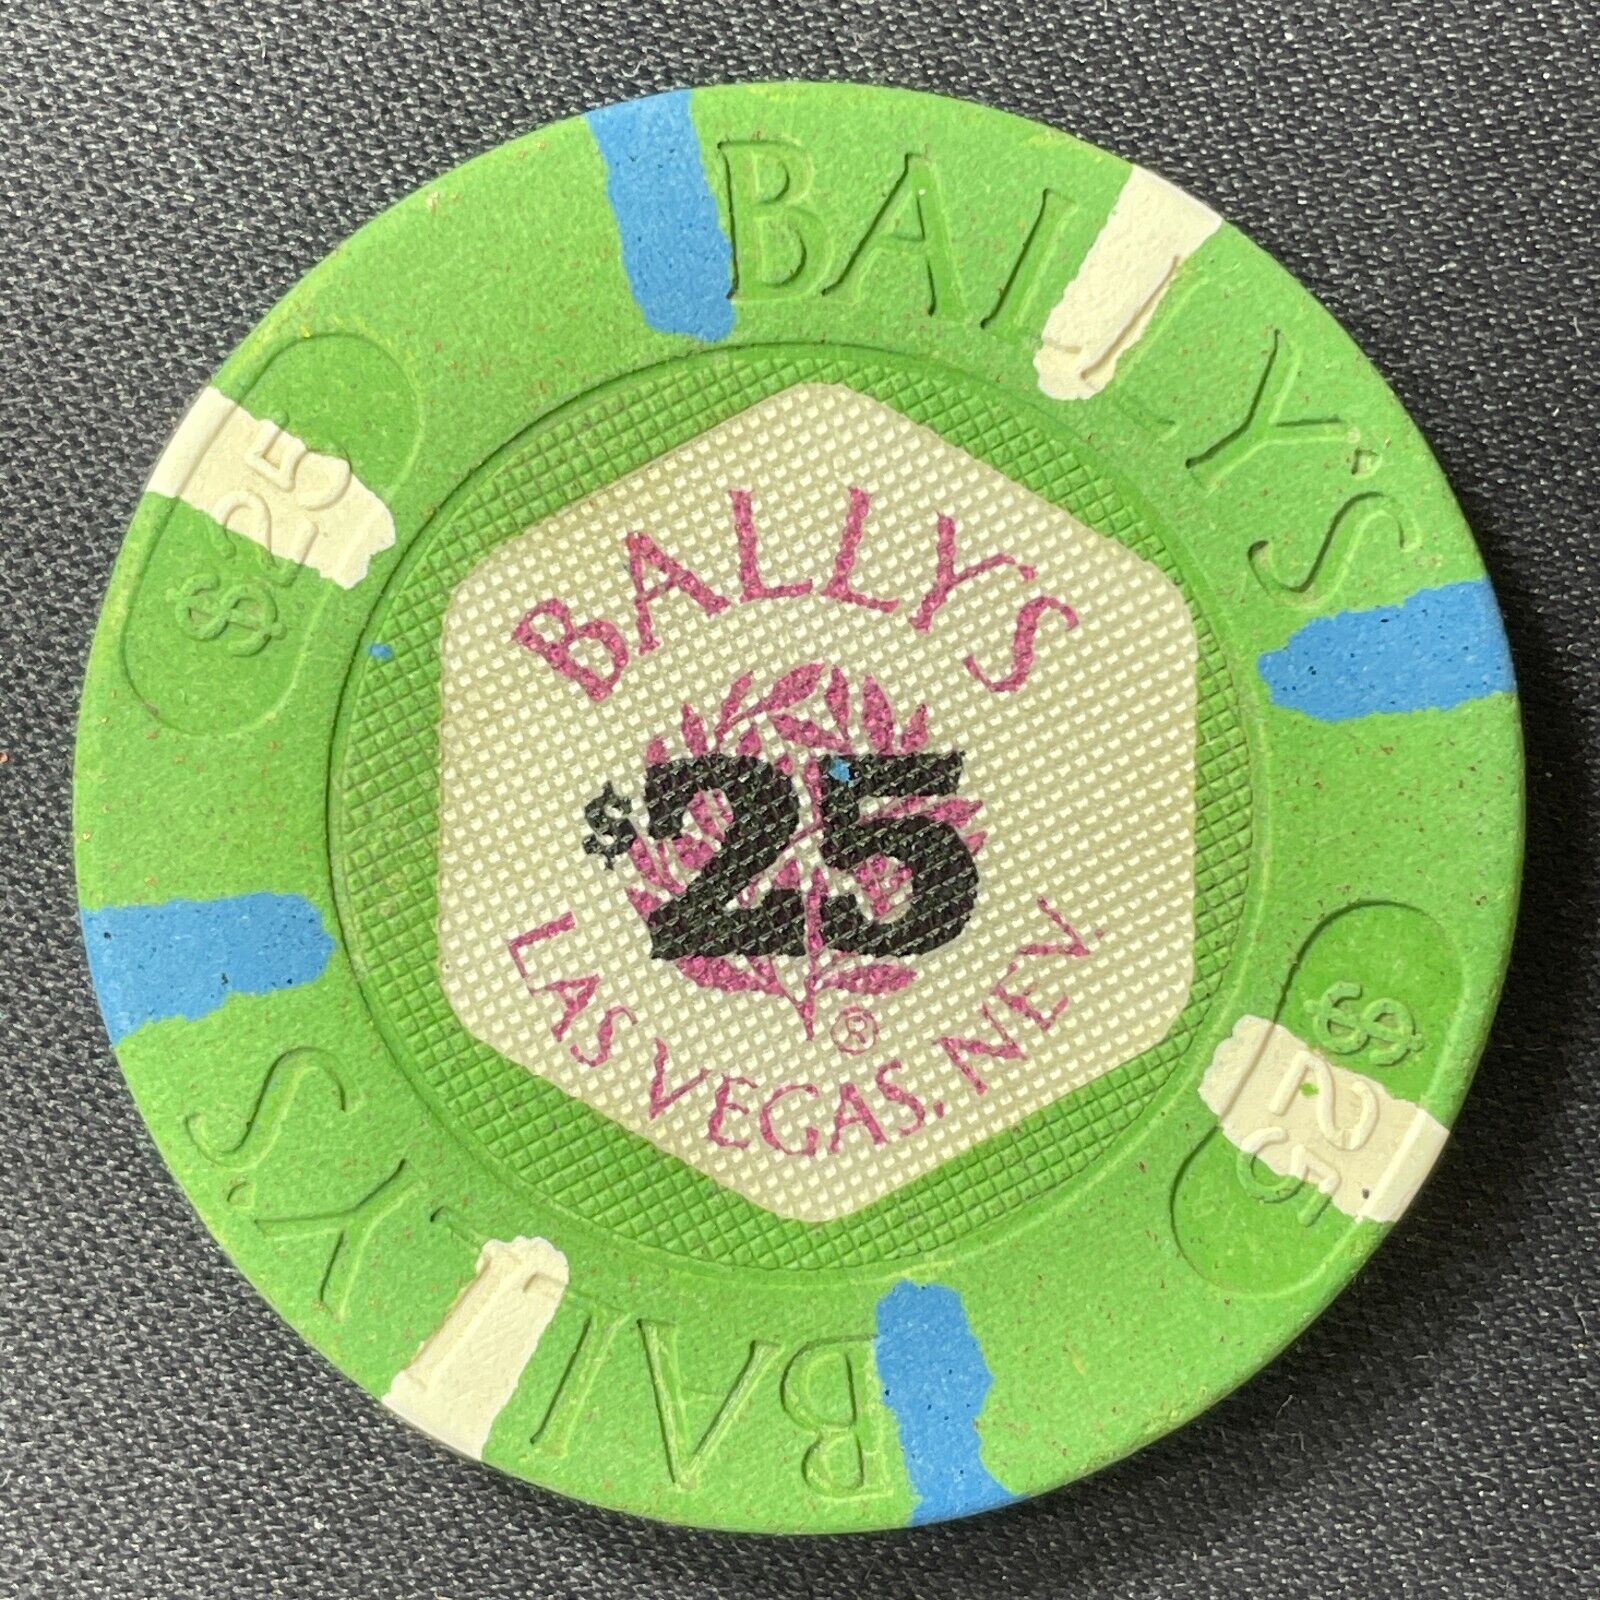 Bally\'s Las Vegas $25 casino chip house chip 1986 obsolete gaming token LV25